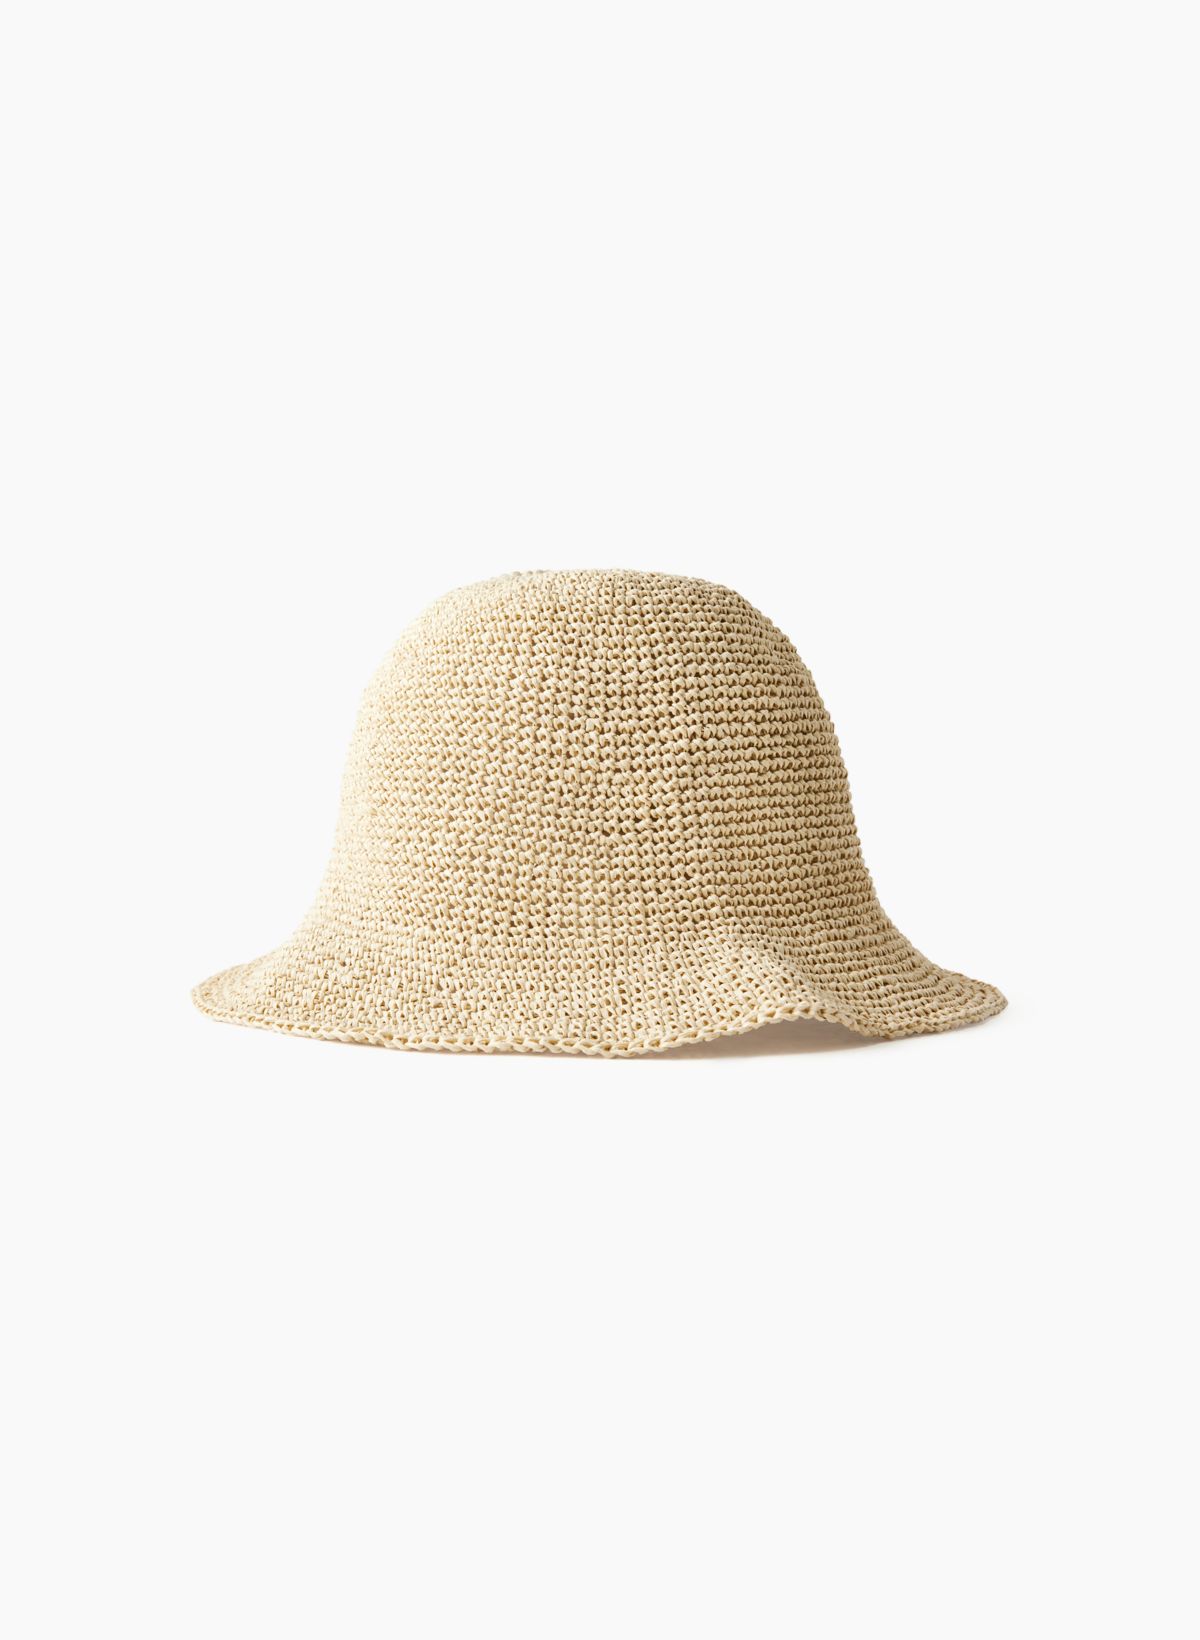 Bucket Hat! Woven bucket hat created using merino wool and cotton